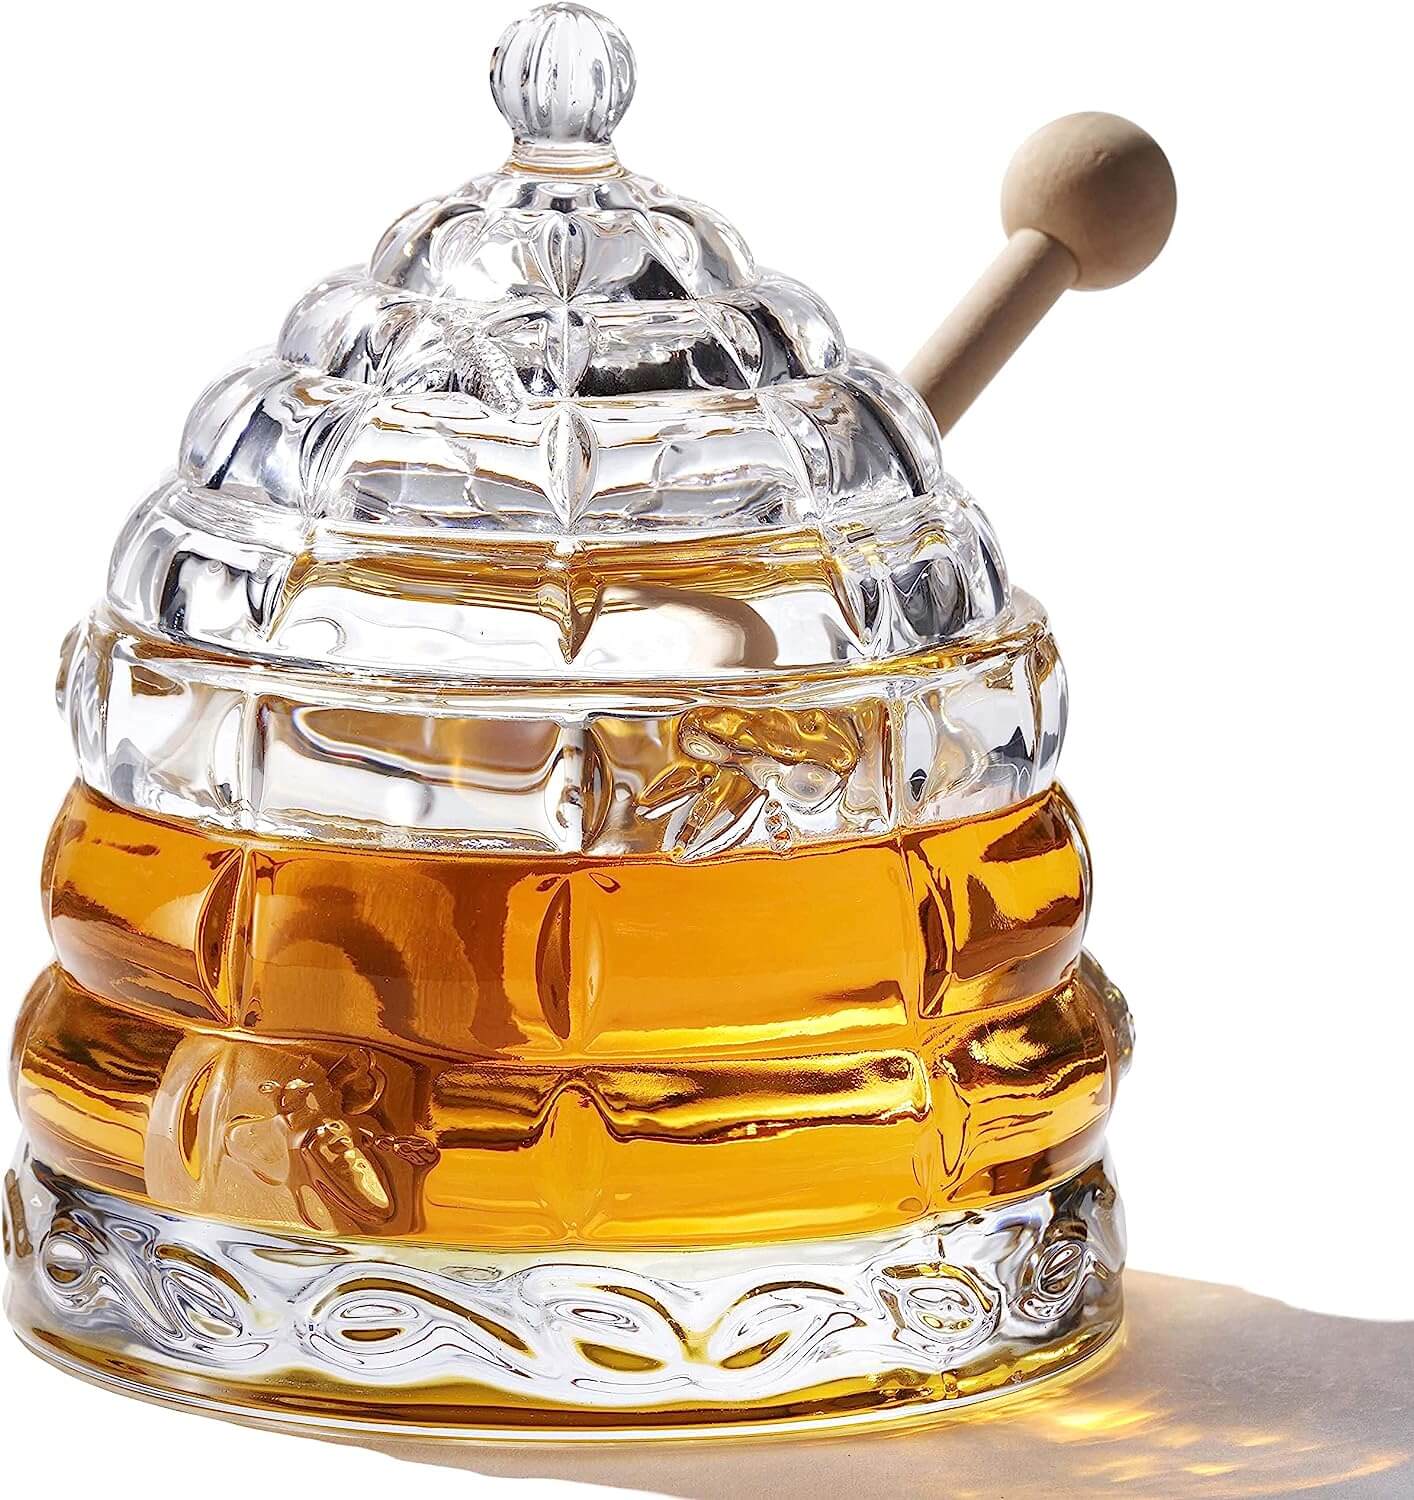 PAULSWAY Crystal Honey Jar with 2 Dipper